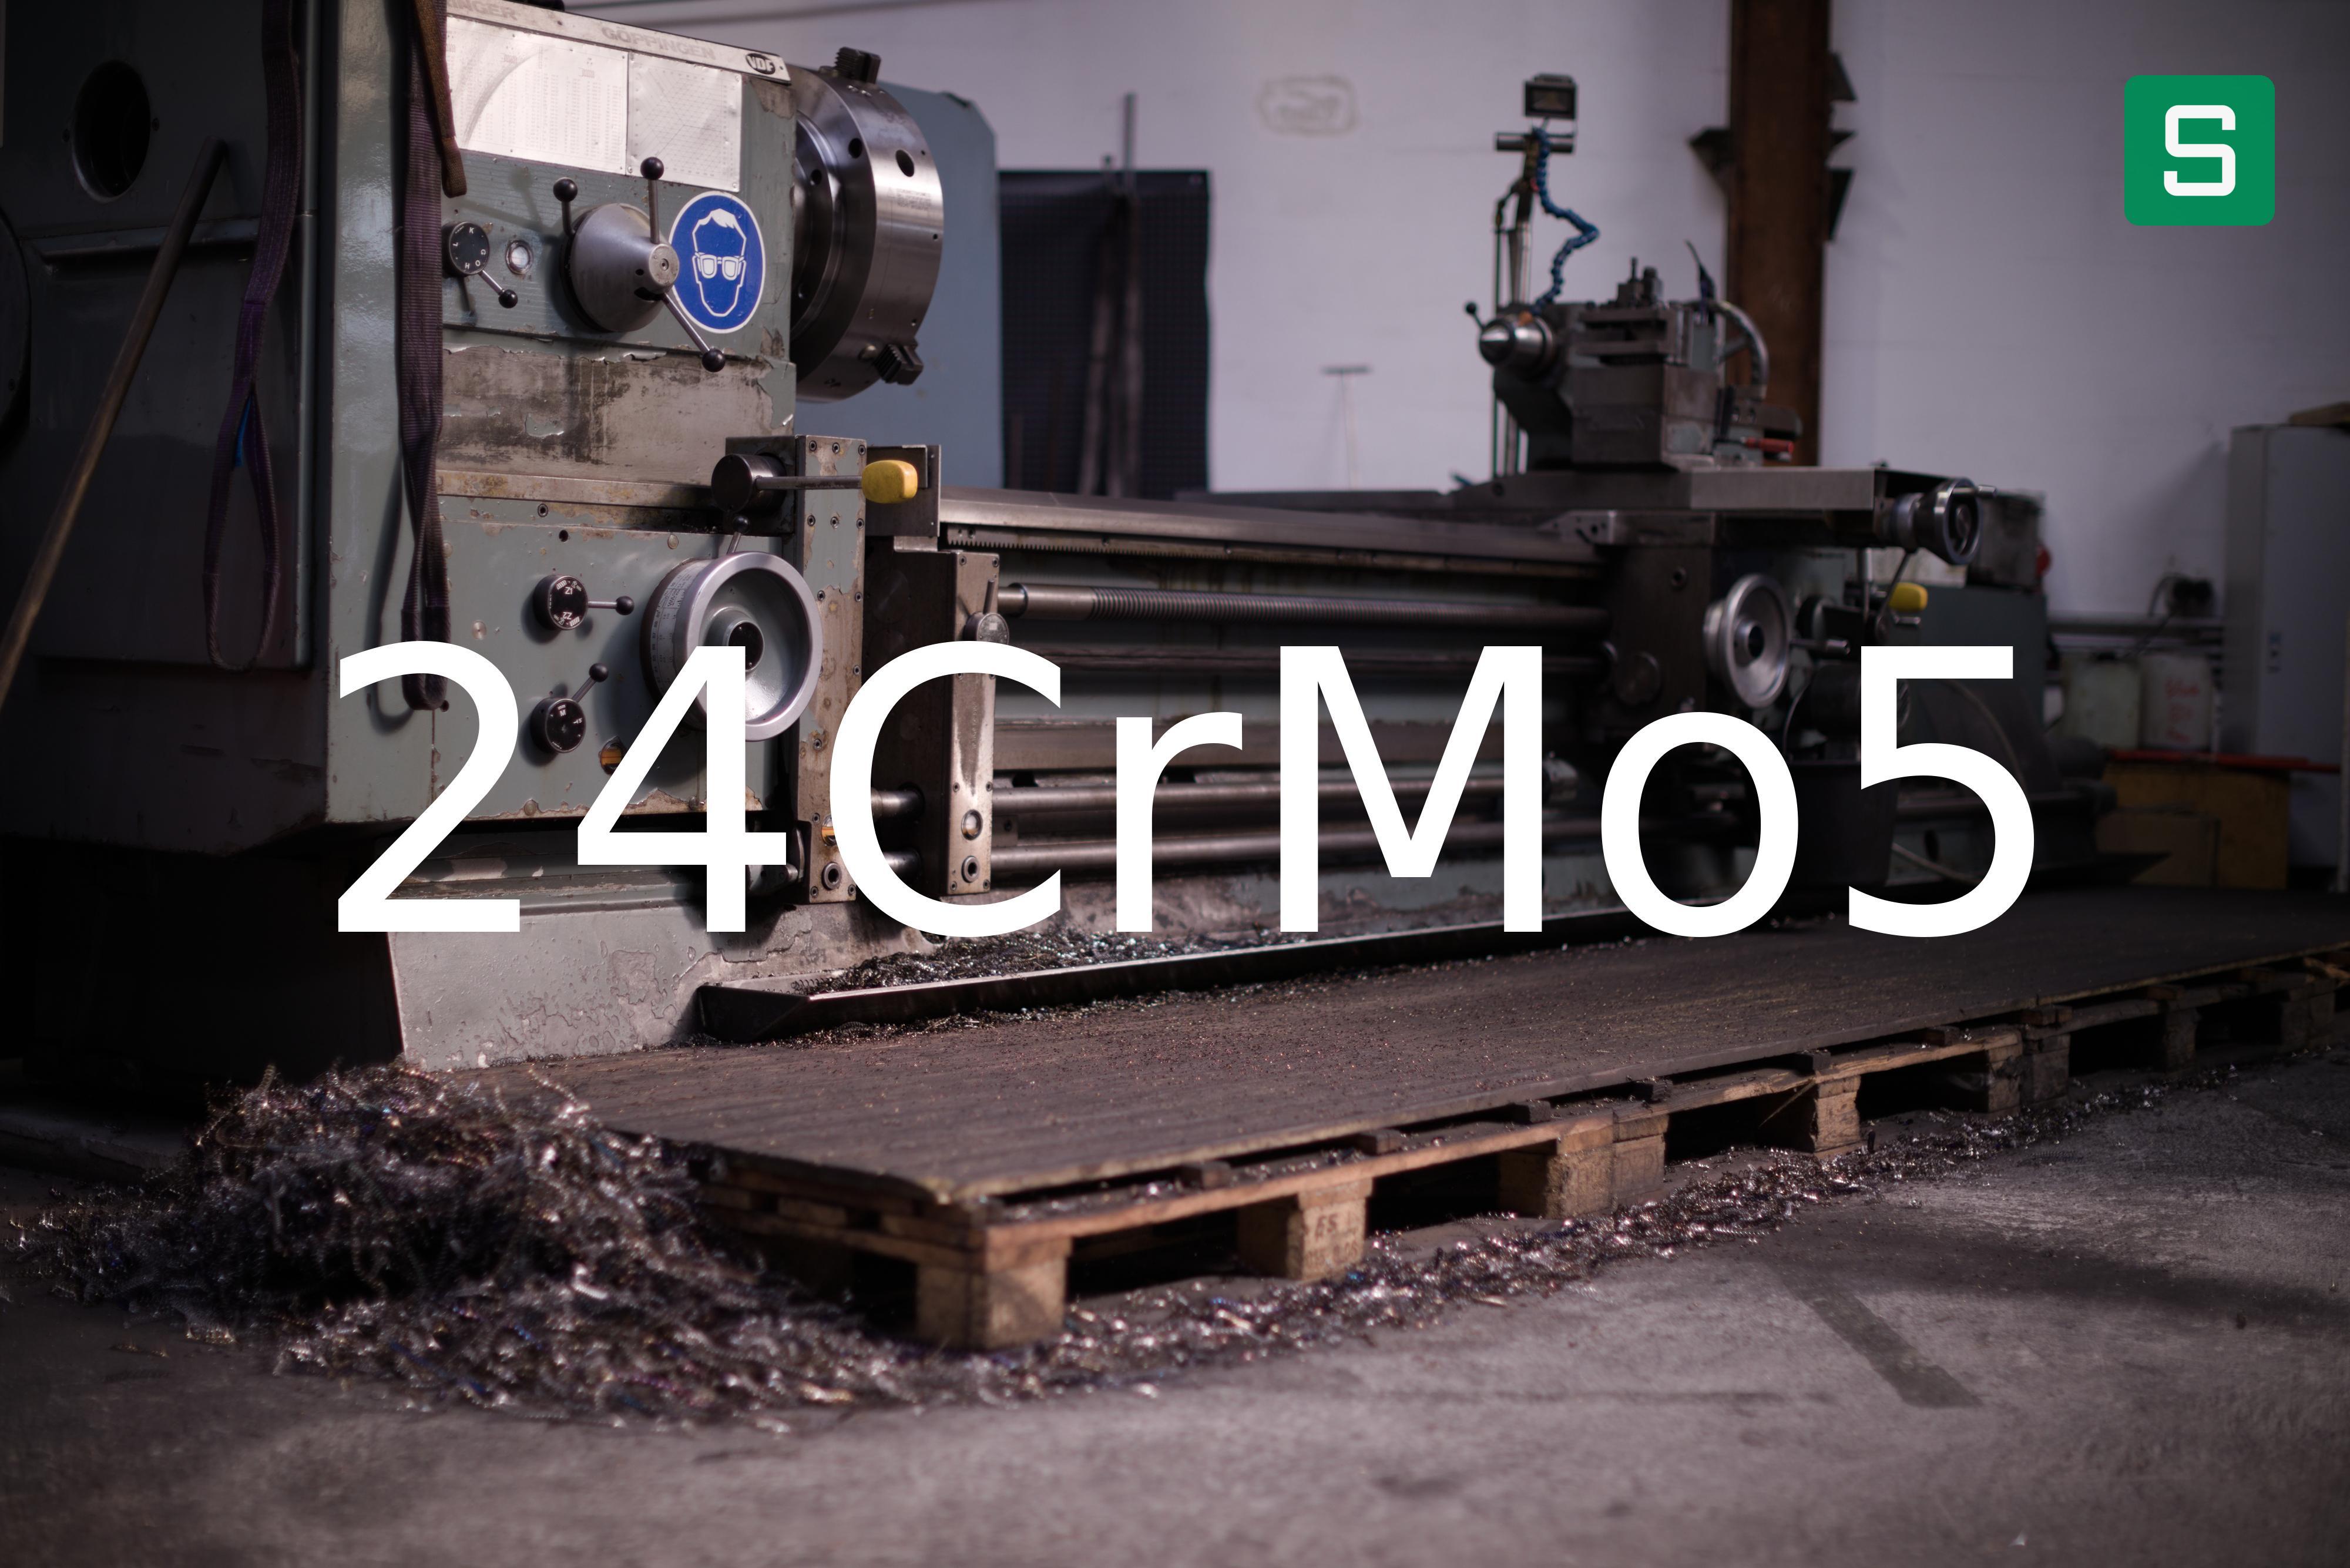 Steel Material: 24CrMo5